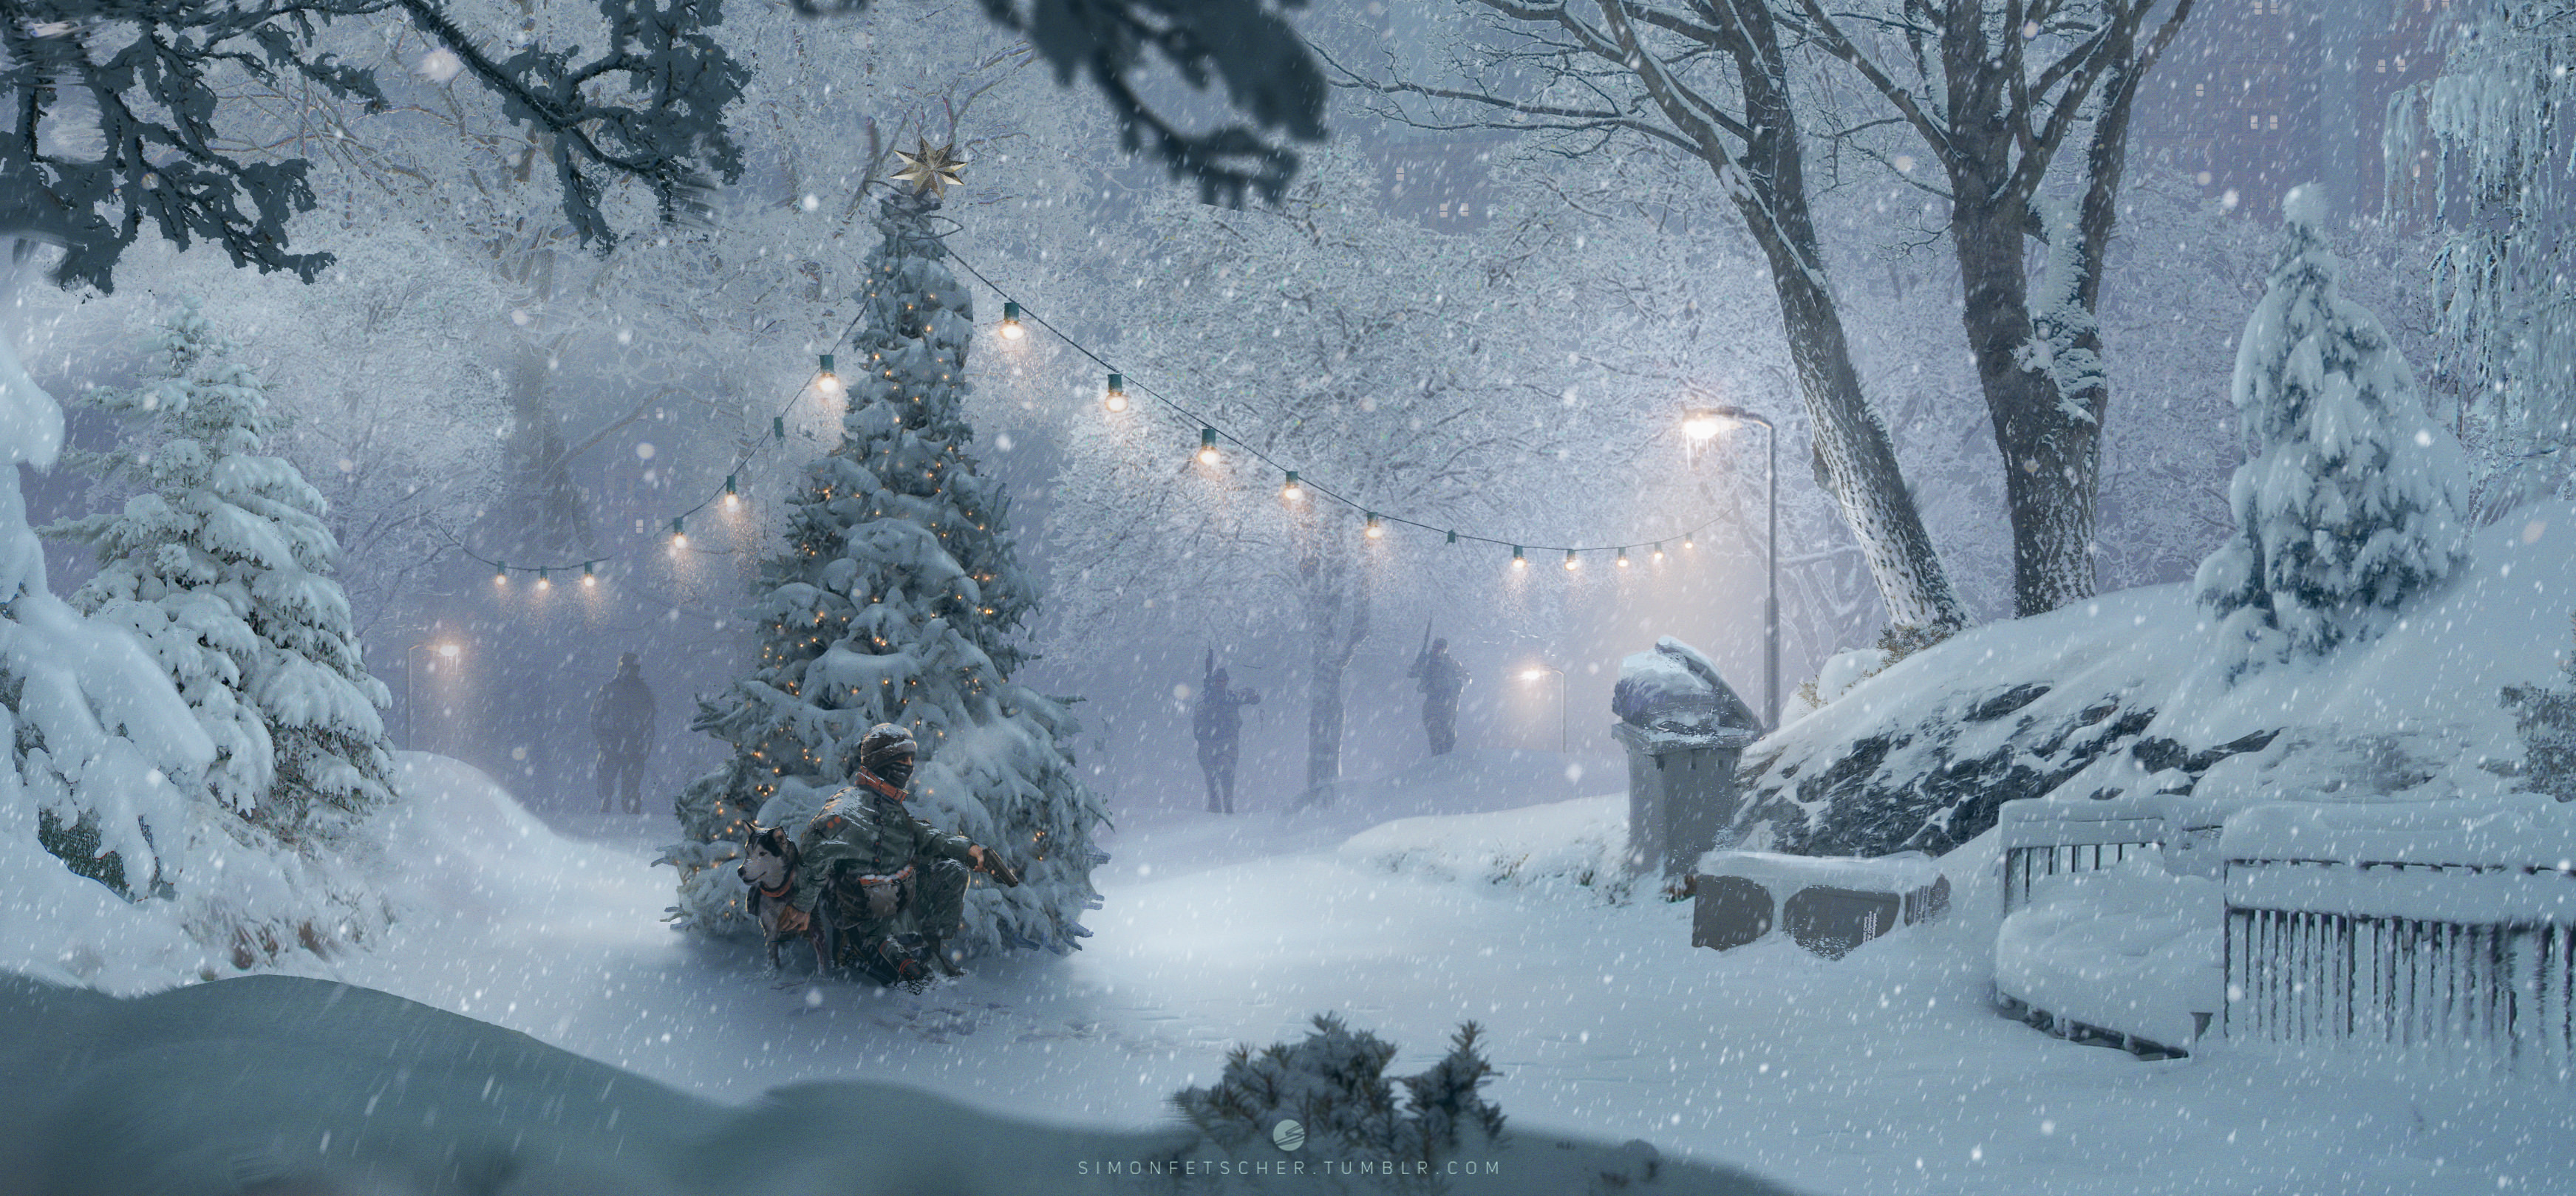 General 3486x1619 snow winter artwork dog soldier military gun lights night dark snowing trees trash Christmas lights Christmas tree